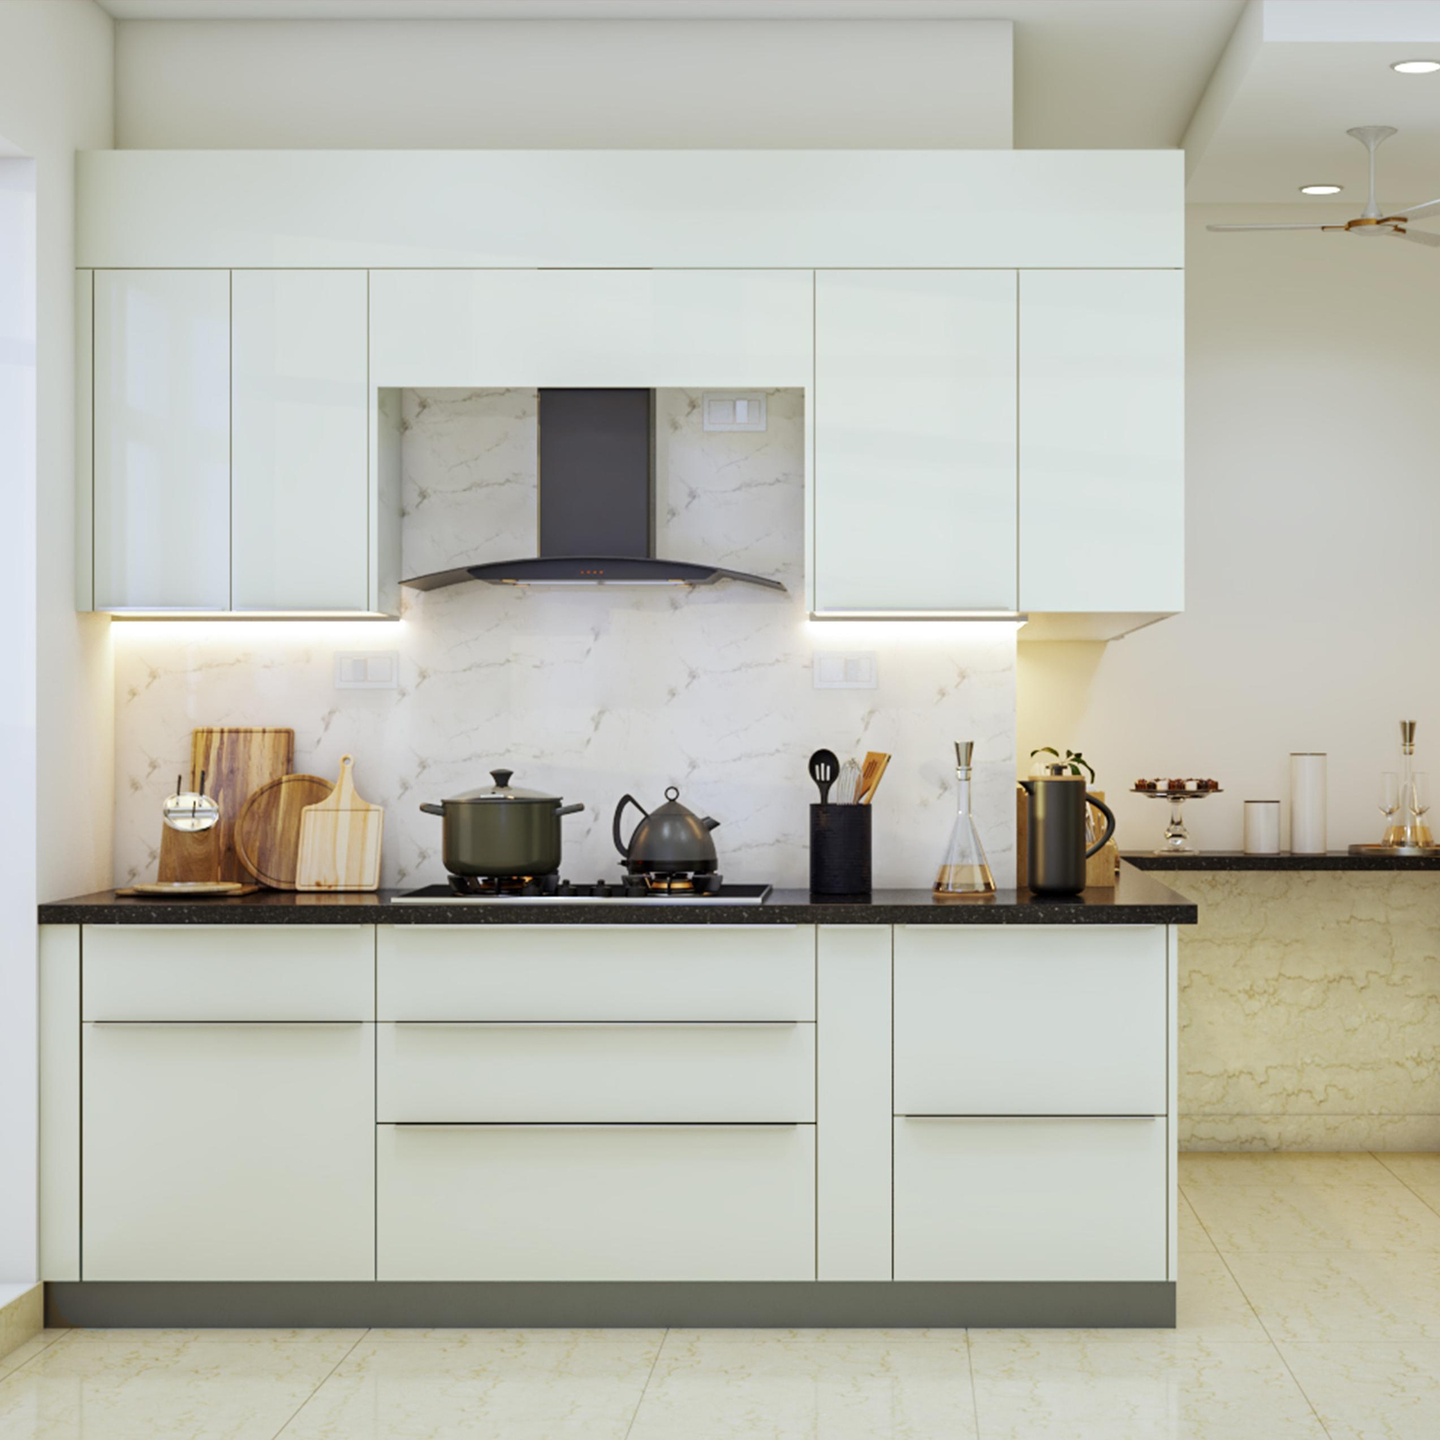 Contemporary Modular Kitchen Design With Under Cabinet Lighting